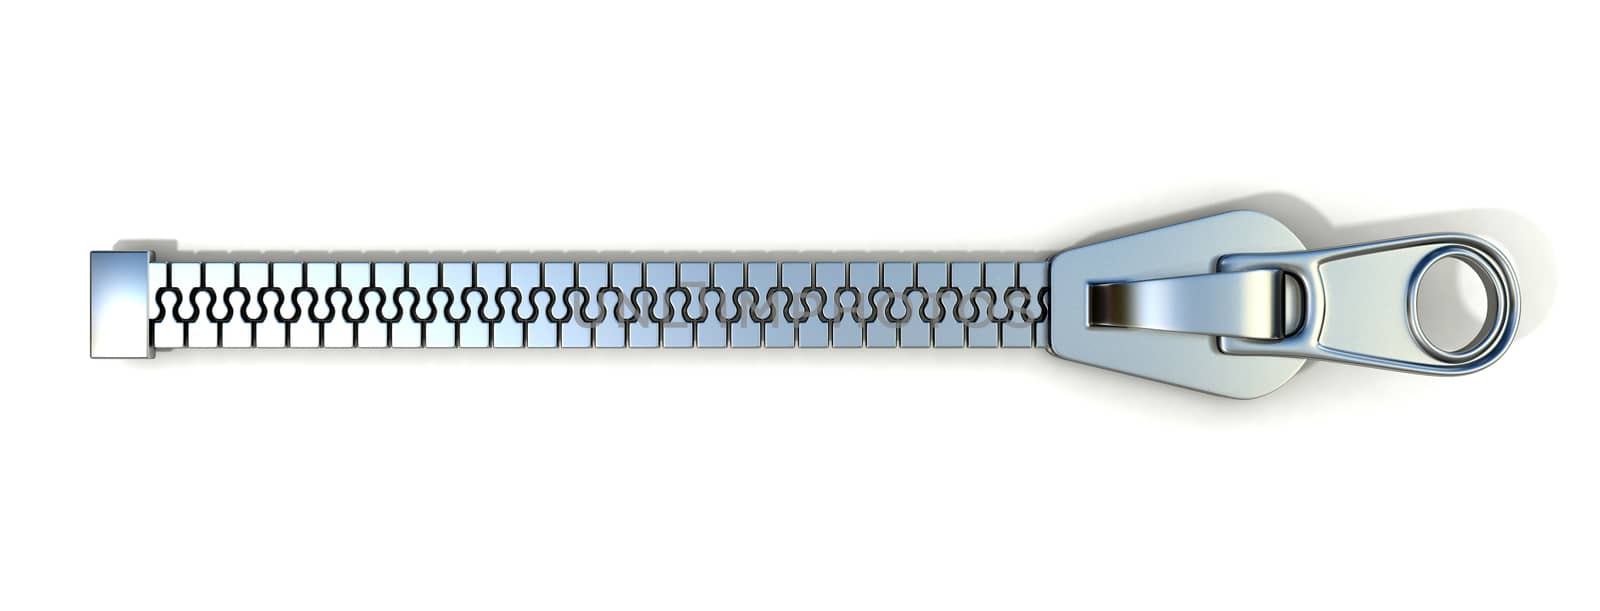 Metal zipper. 3D render illustration isolated on white background